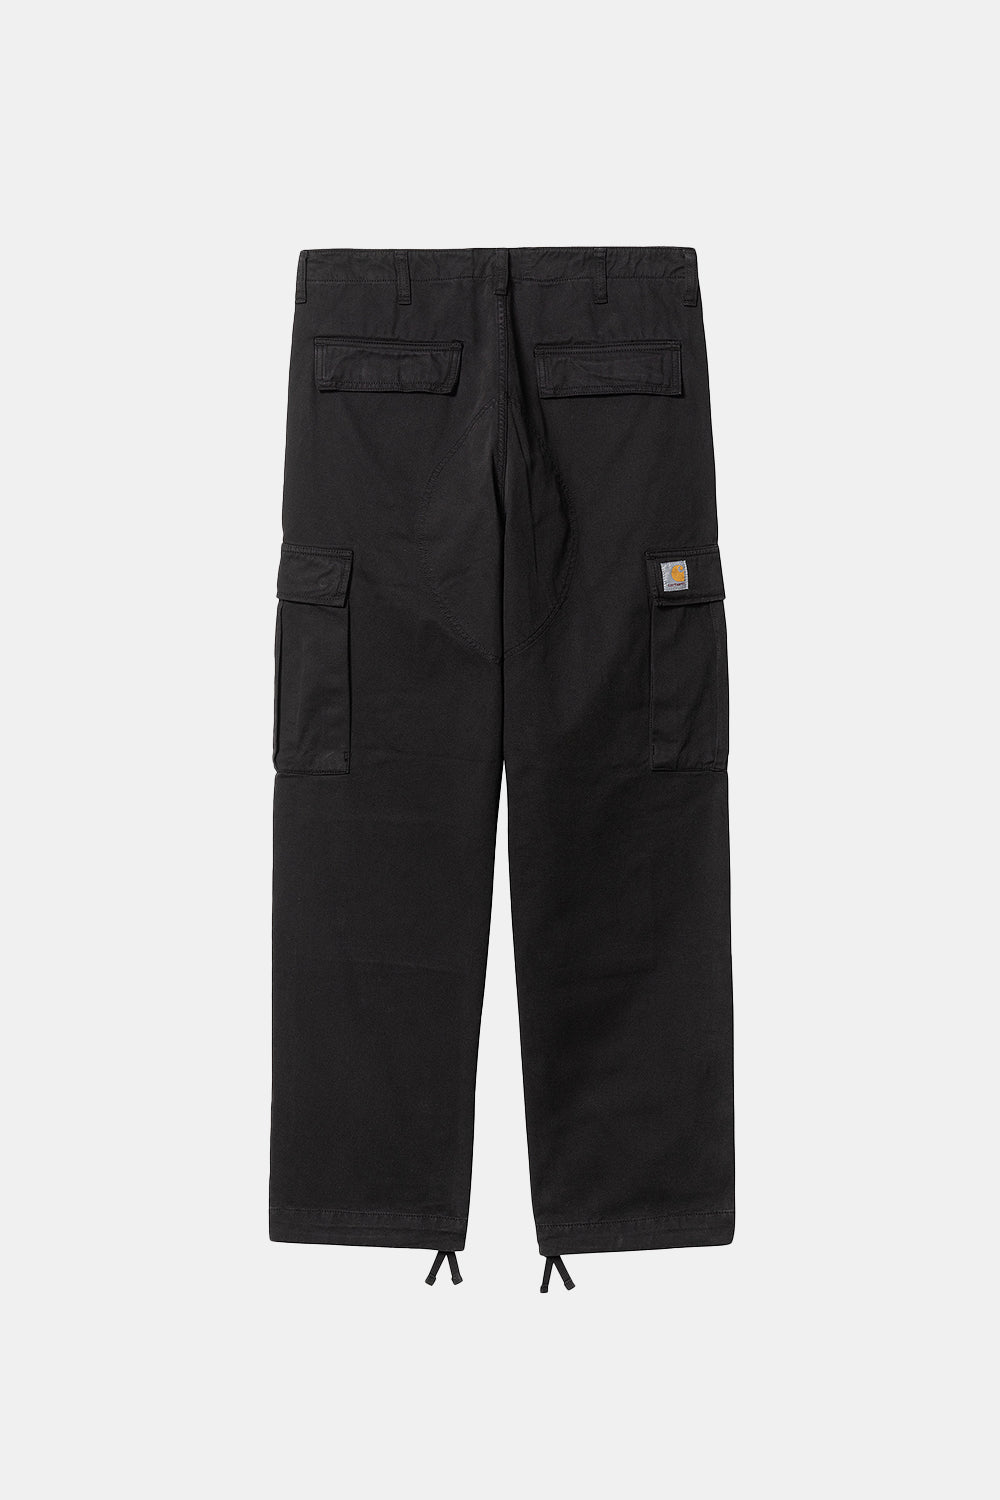 Carhartt WIP Garment Dyed Cargo Pant (Black)